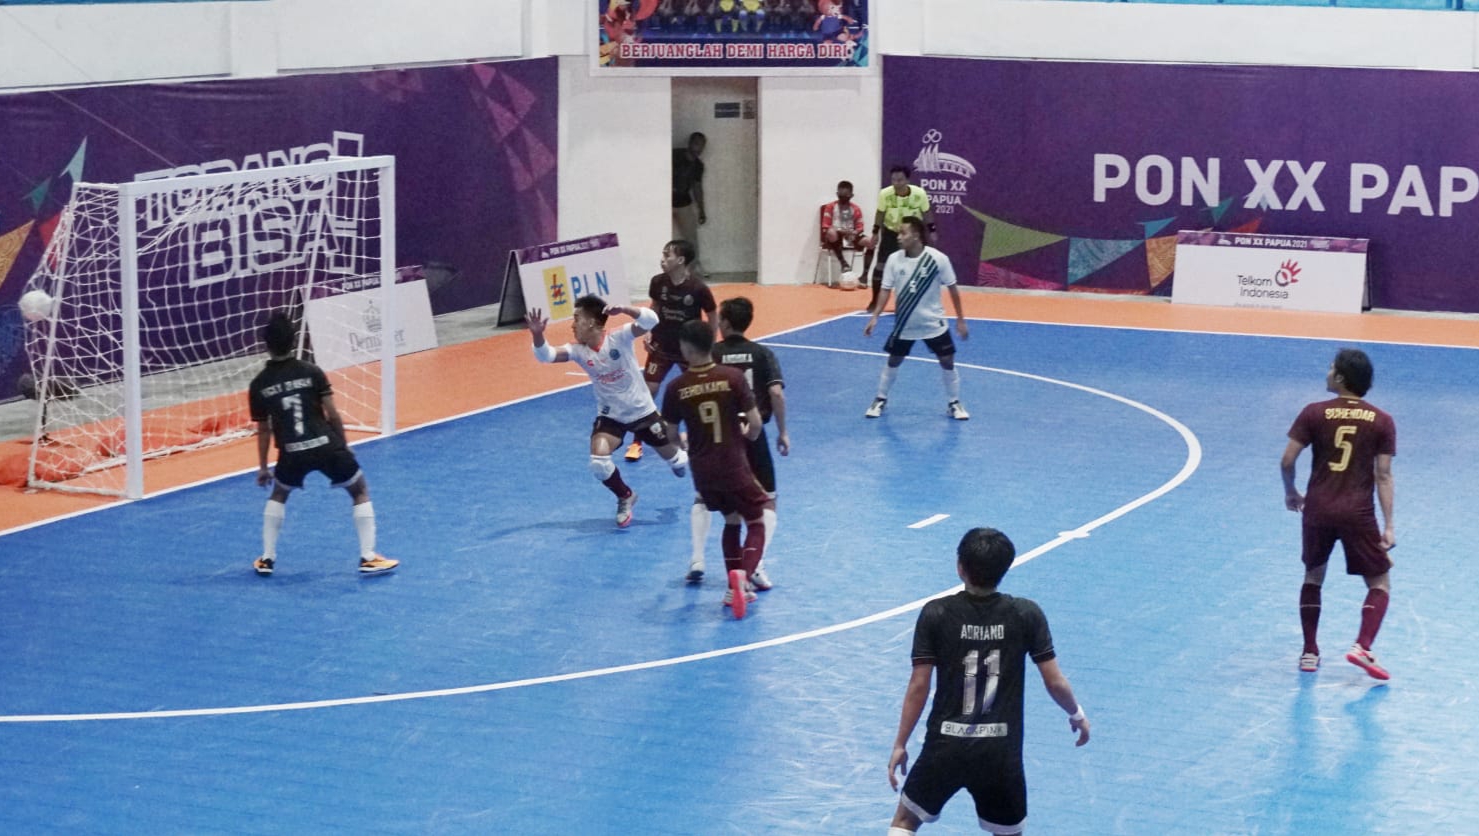 Laga cabor futsal Jawa Timur kontra Sulawesi Selatan berakhir imbang 3-3 di PON XX Papua, Sabtu (25/9/2021)./ Foto: Futsal Jatim